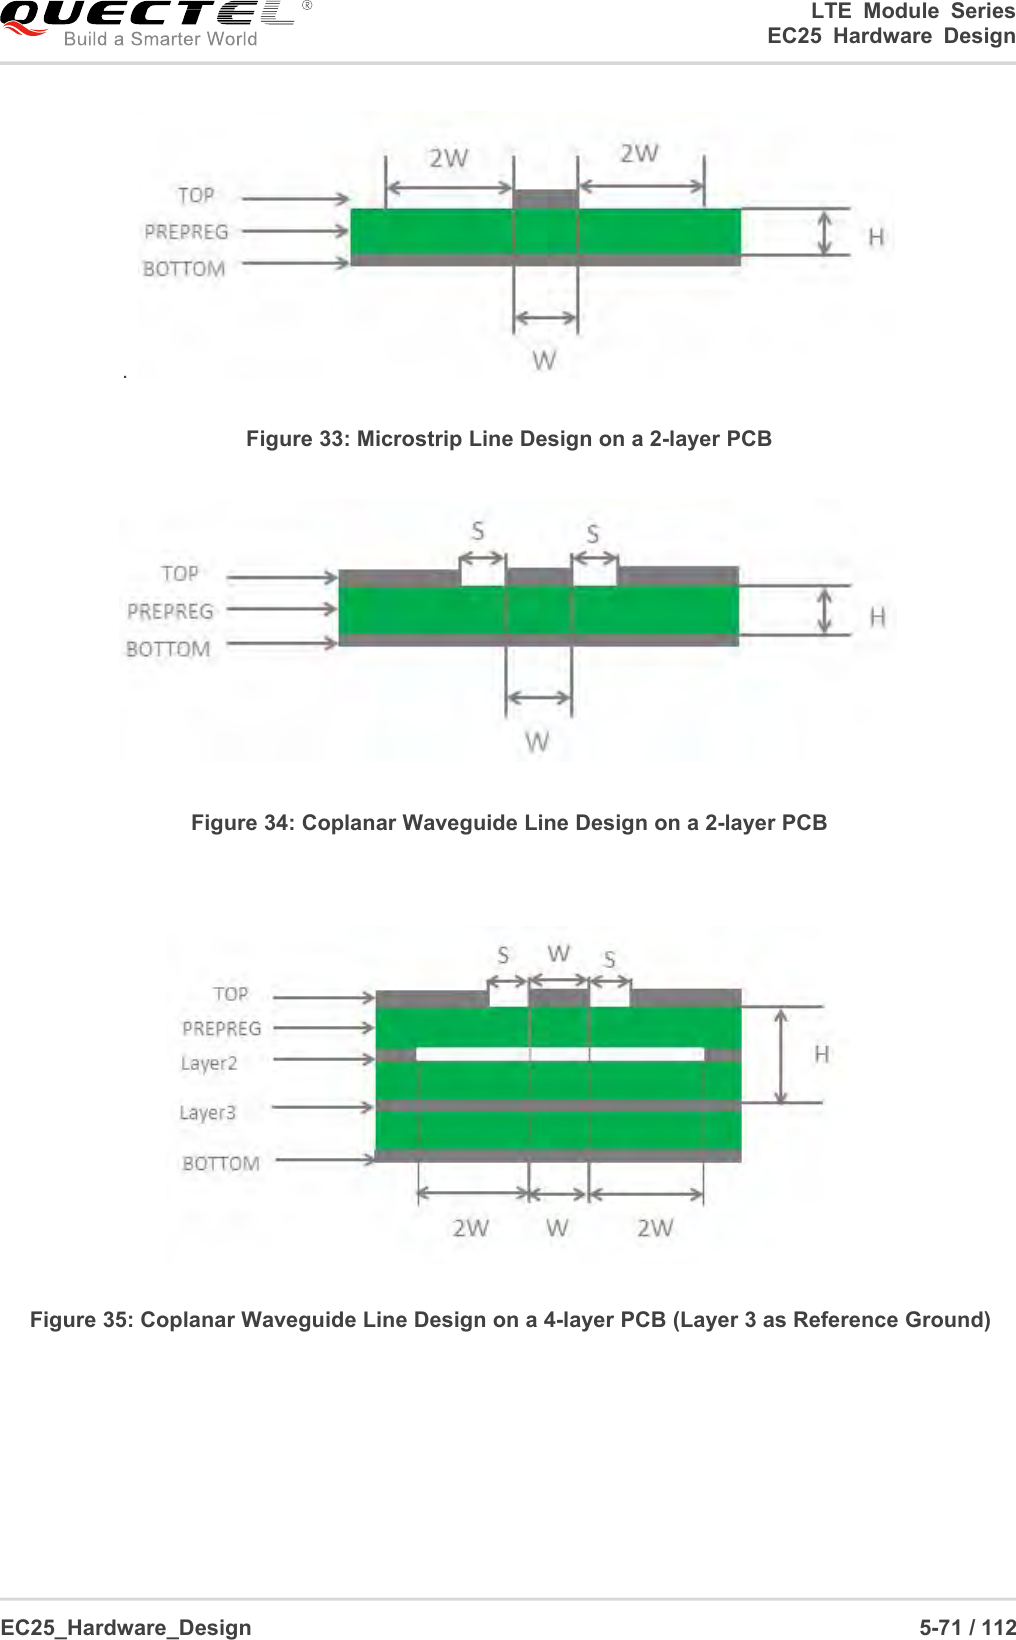 LTE Module SeriesEC25 Hardware DesignEC25_Hardware_Design 5-71 / 112.Figure 33: Microstrip Line Design on a 2-layer PCBFigure 34: Coplanar Waveguide Line Design on a 2-layer PCBFigure 35: Coplanar Waveguide Line Design on a 4-layer PCB (Layer 3 as Reference Ground)